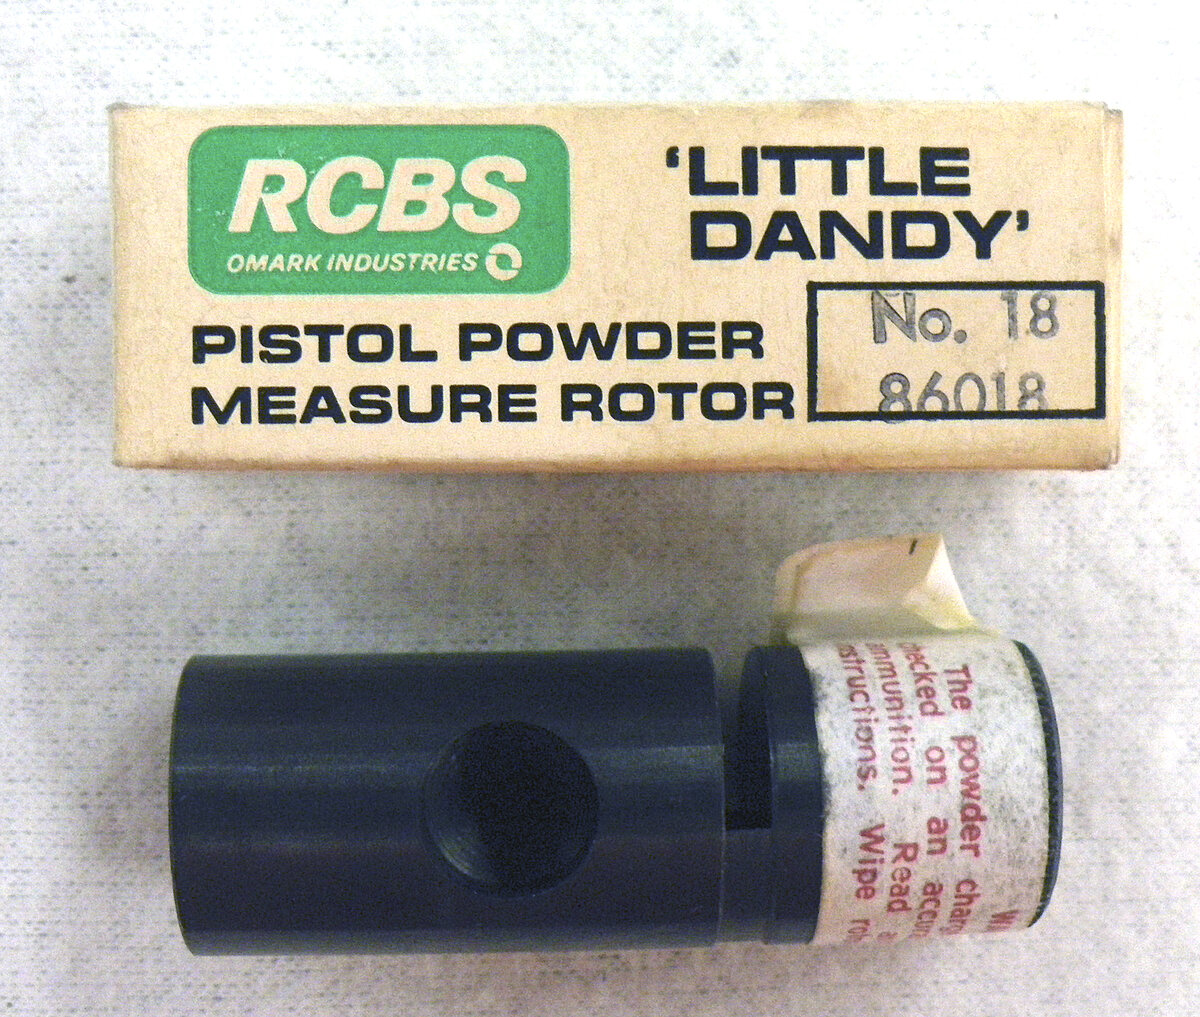 RCBS Pistol Powder Measure Rotor No. 18 - Little Dandy